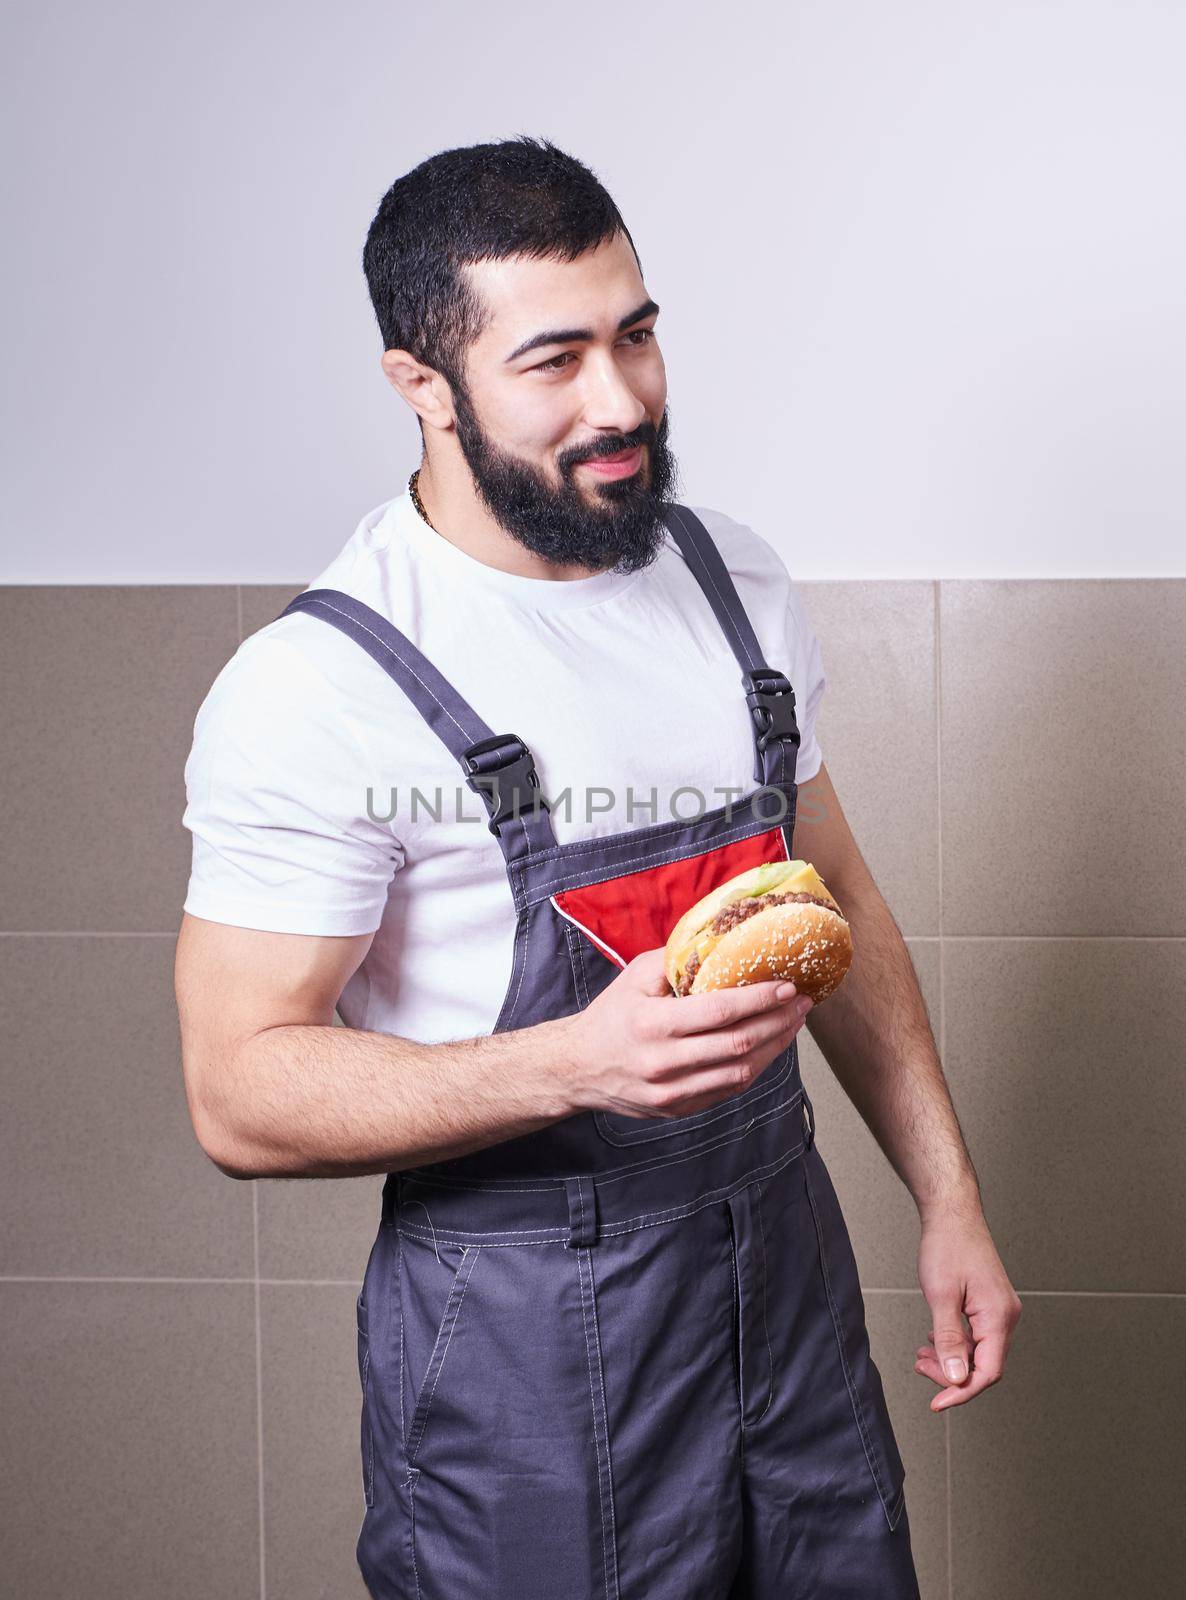 Worker wearing uniform eating burger during a lunch break